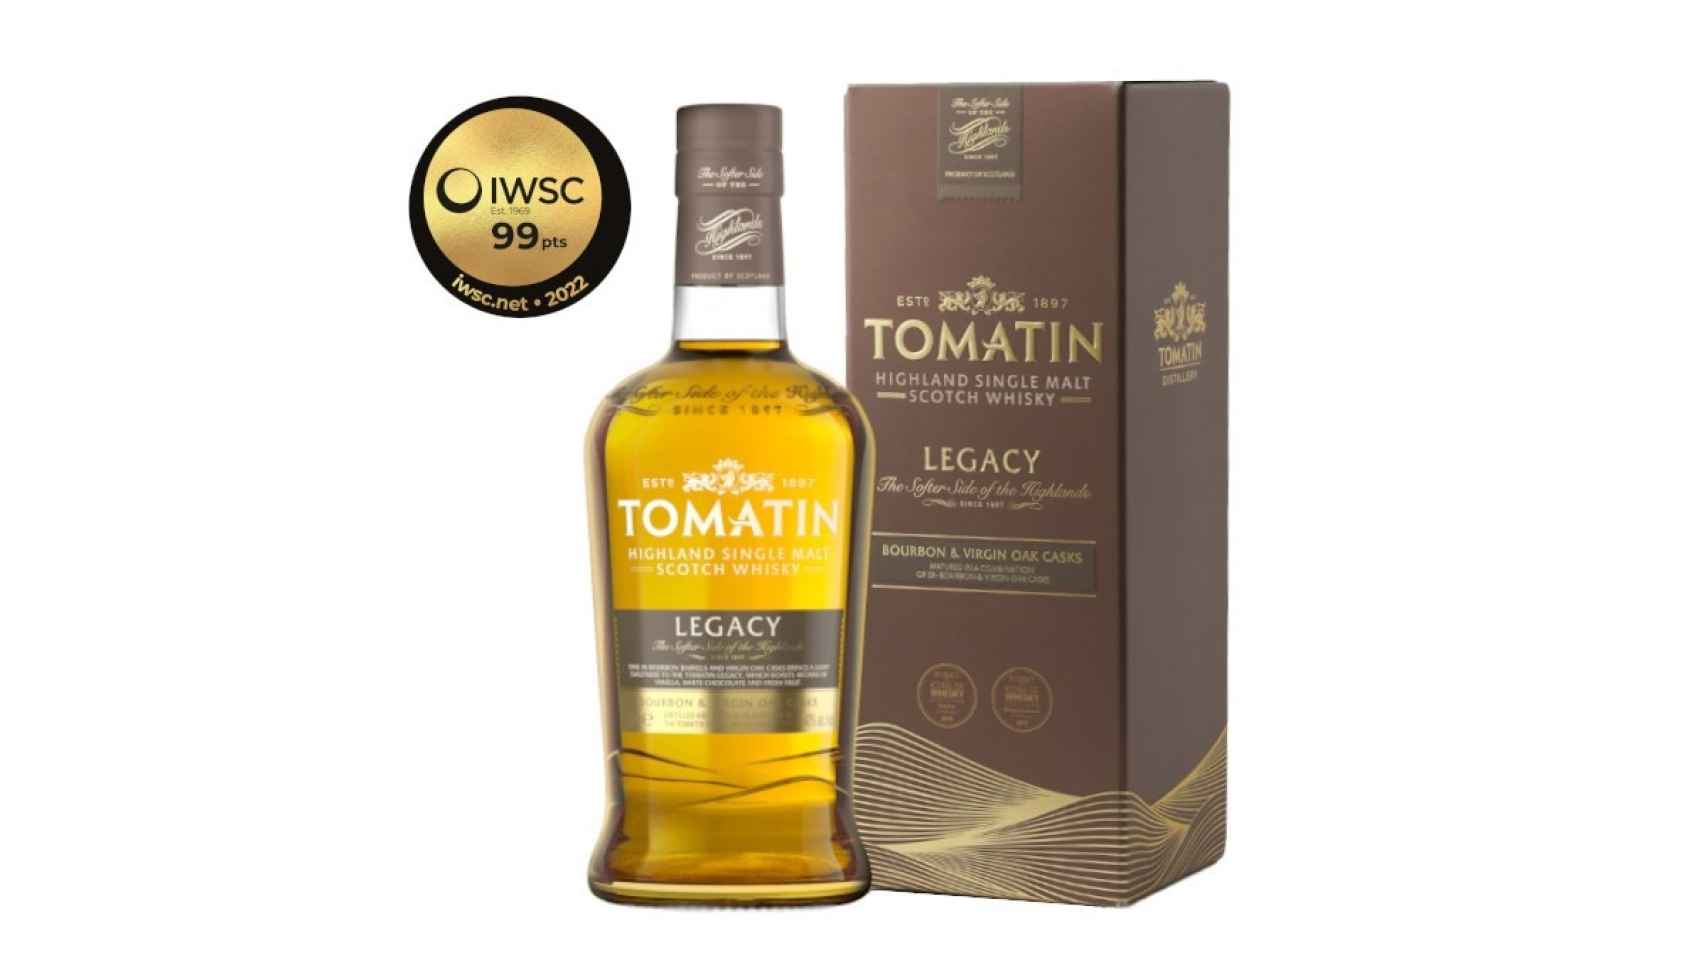 Tomatin Legacy Highland Single Malt Scotch Whisky.